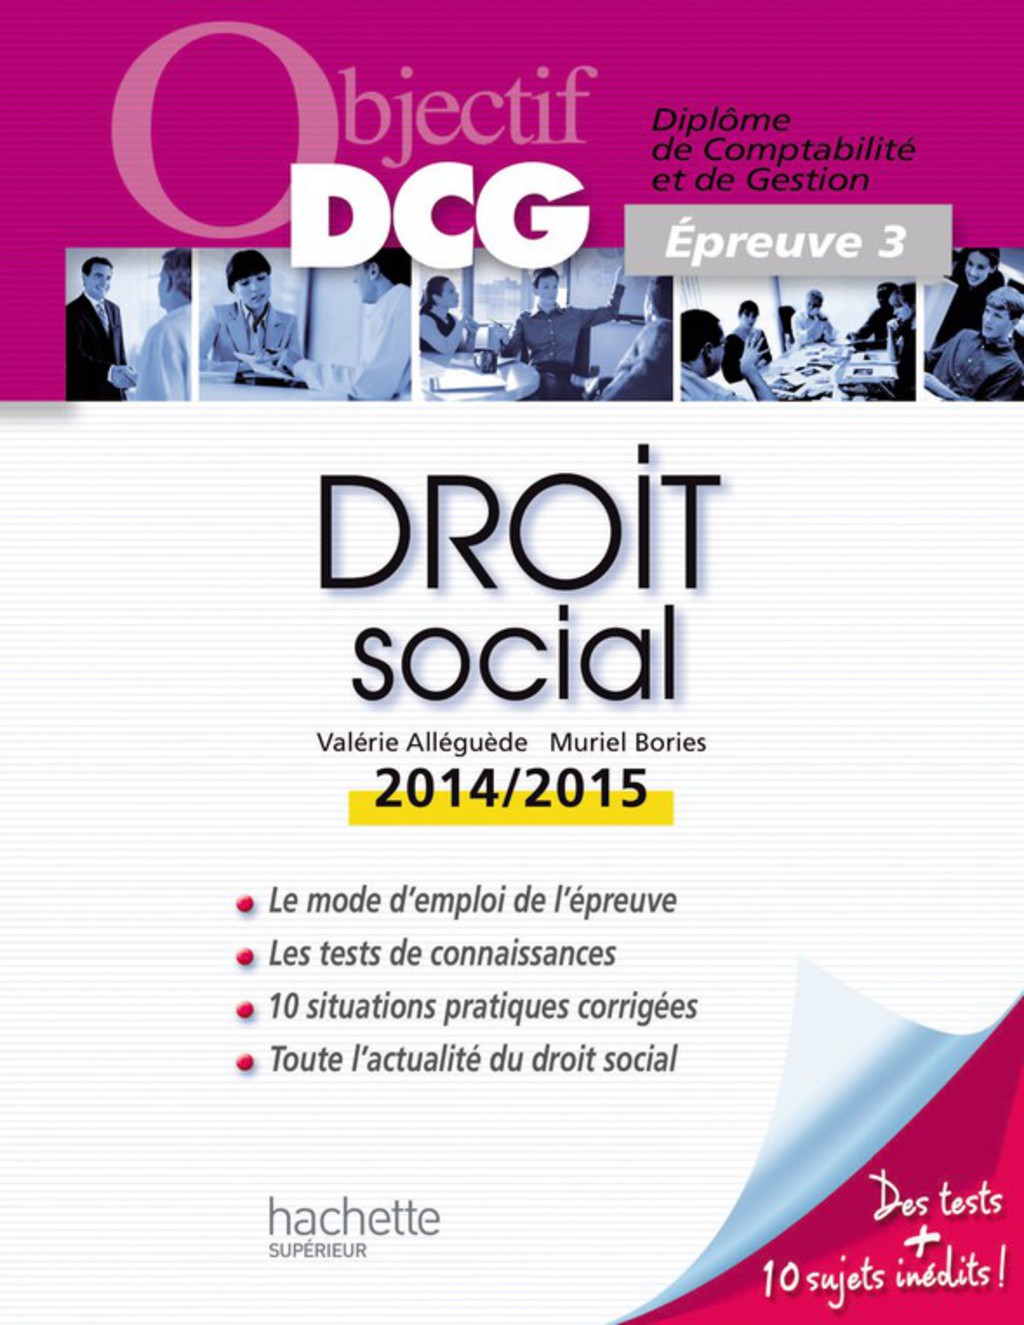 ISBN 9782010000270 product image for Objectif DCG Droit social 2014 2015 (eBook) | upcitemdb.com